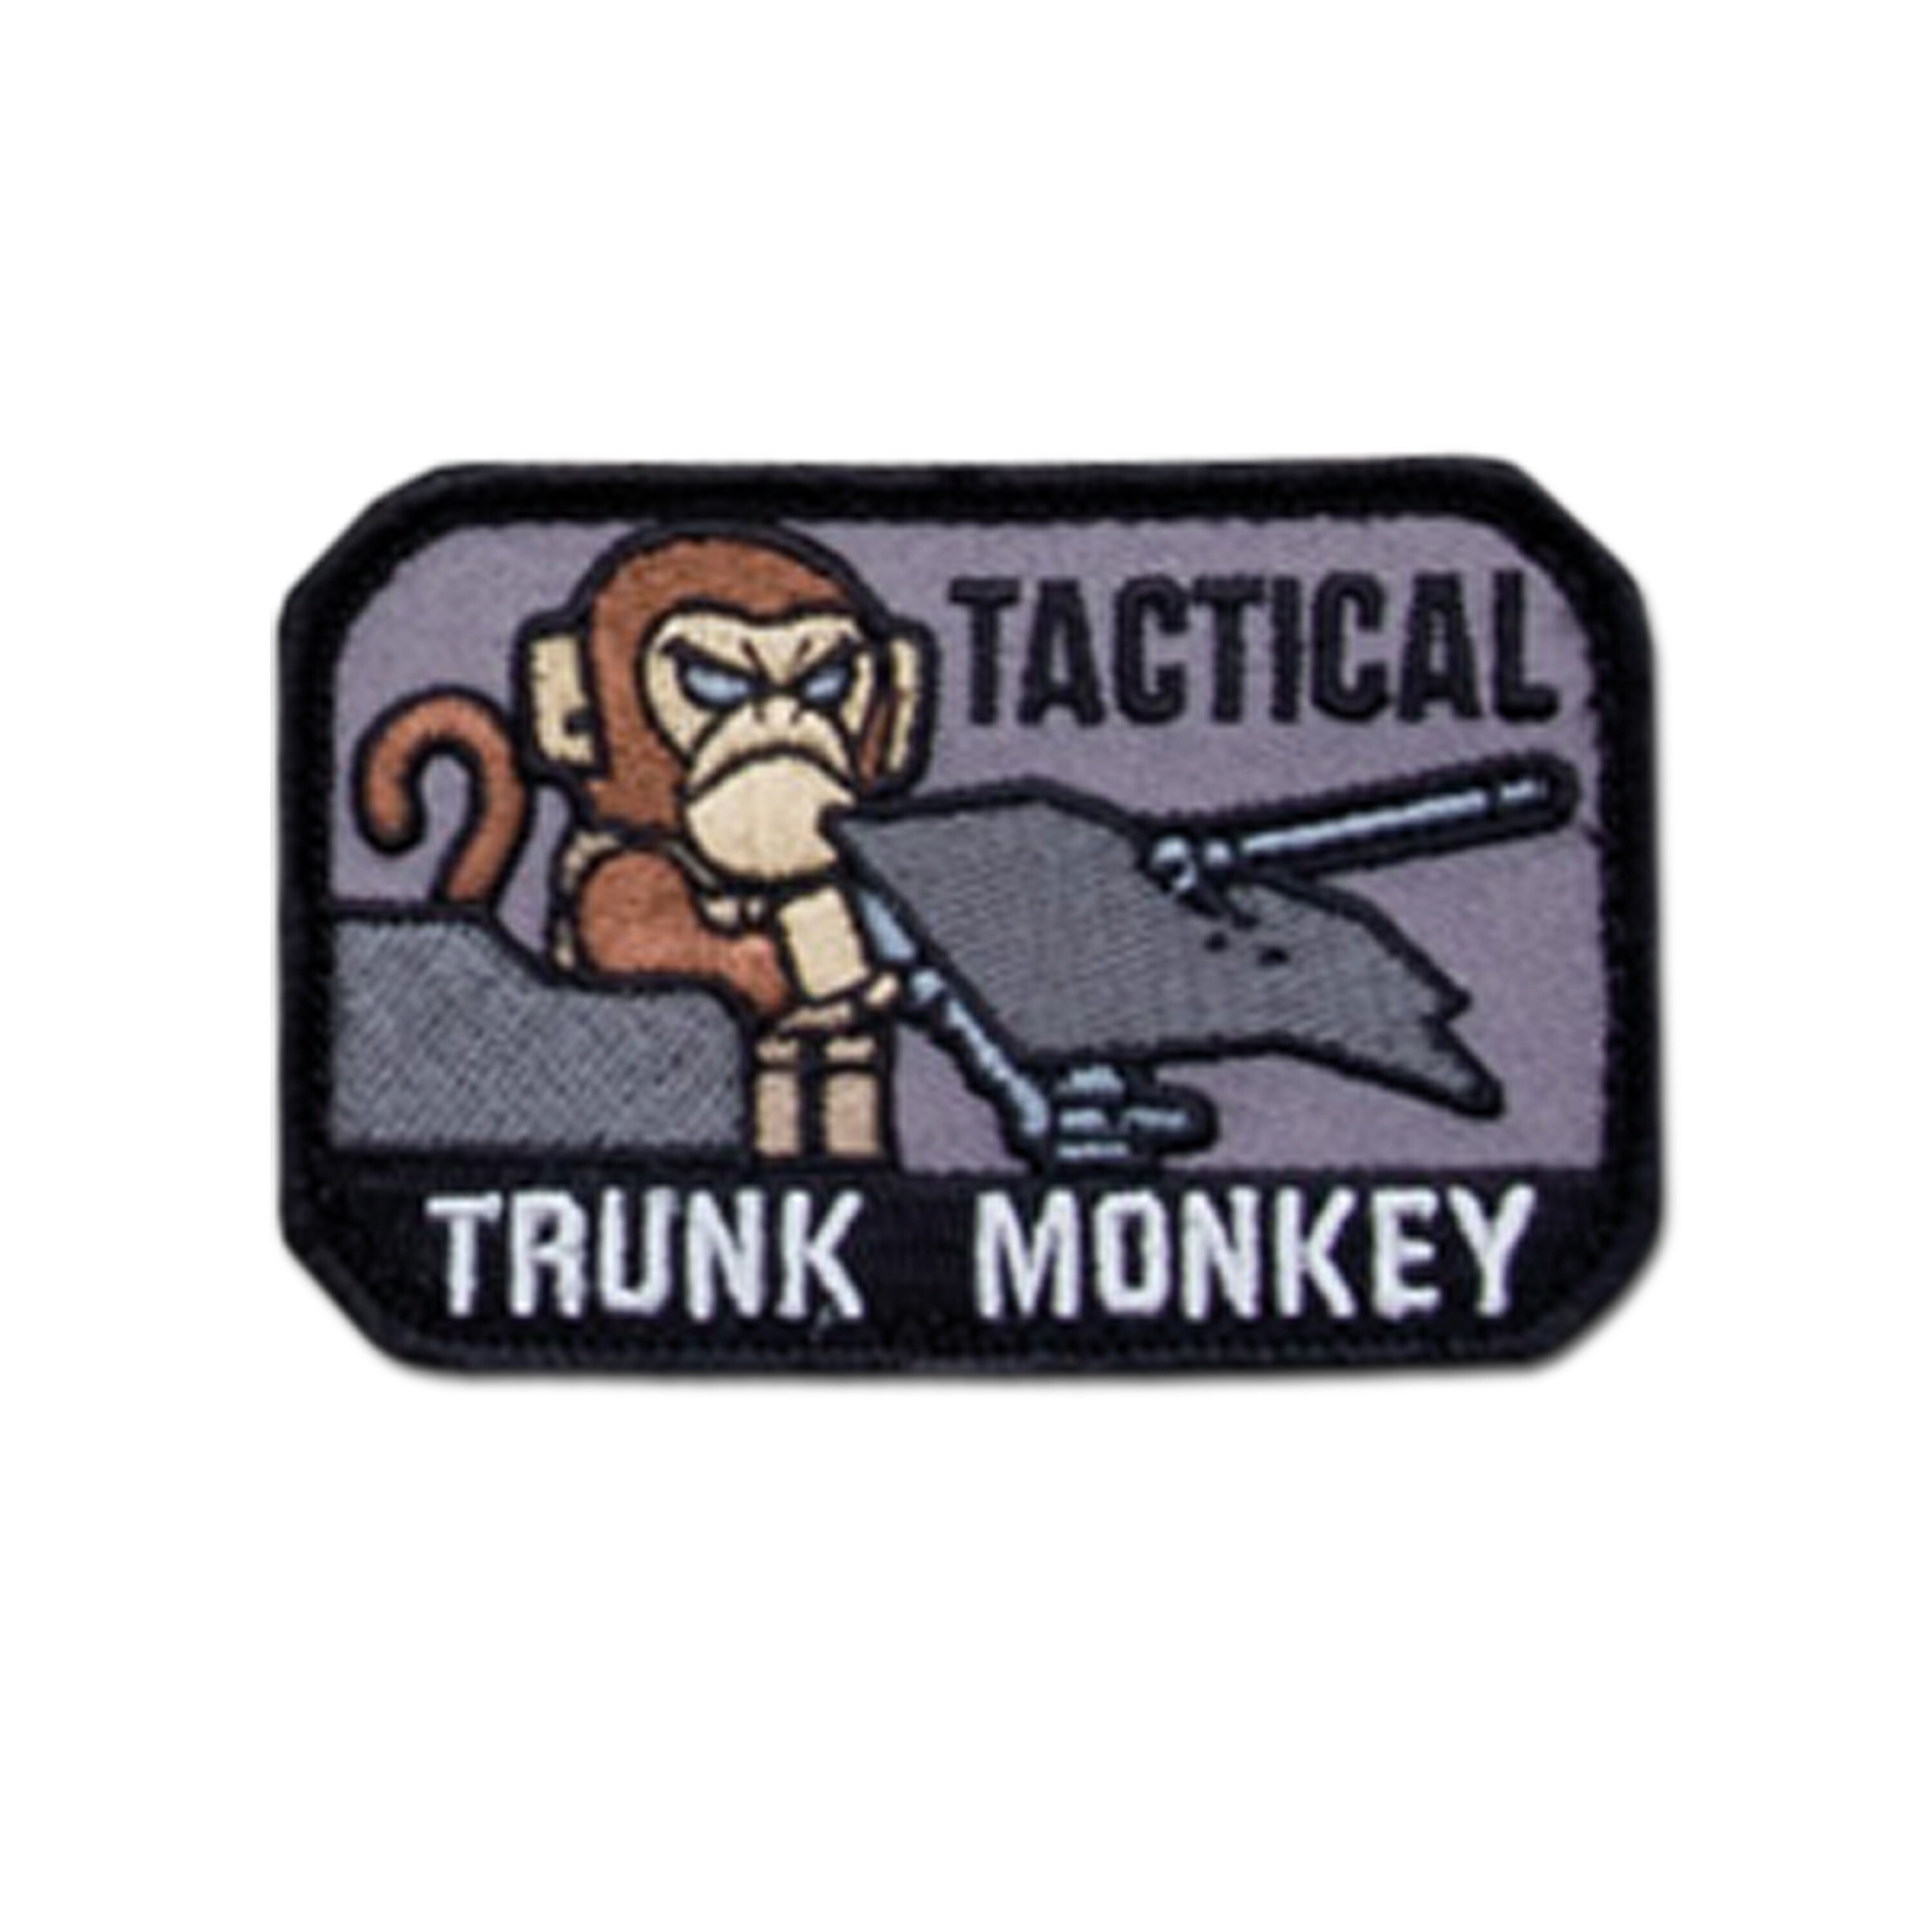 MilSpecMonkey Patch Tactical Trunk Monkey swat | MilSpecMonkey Patch ...